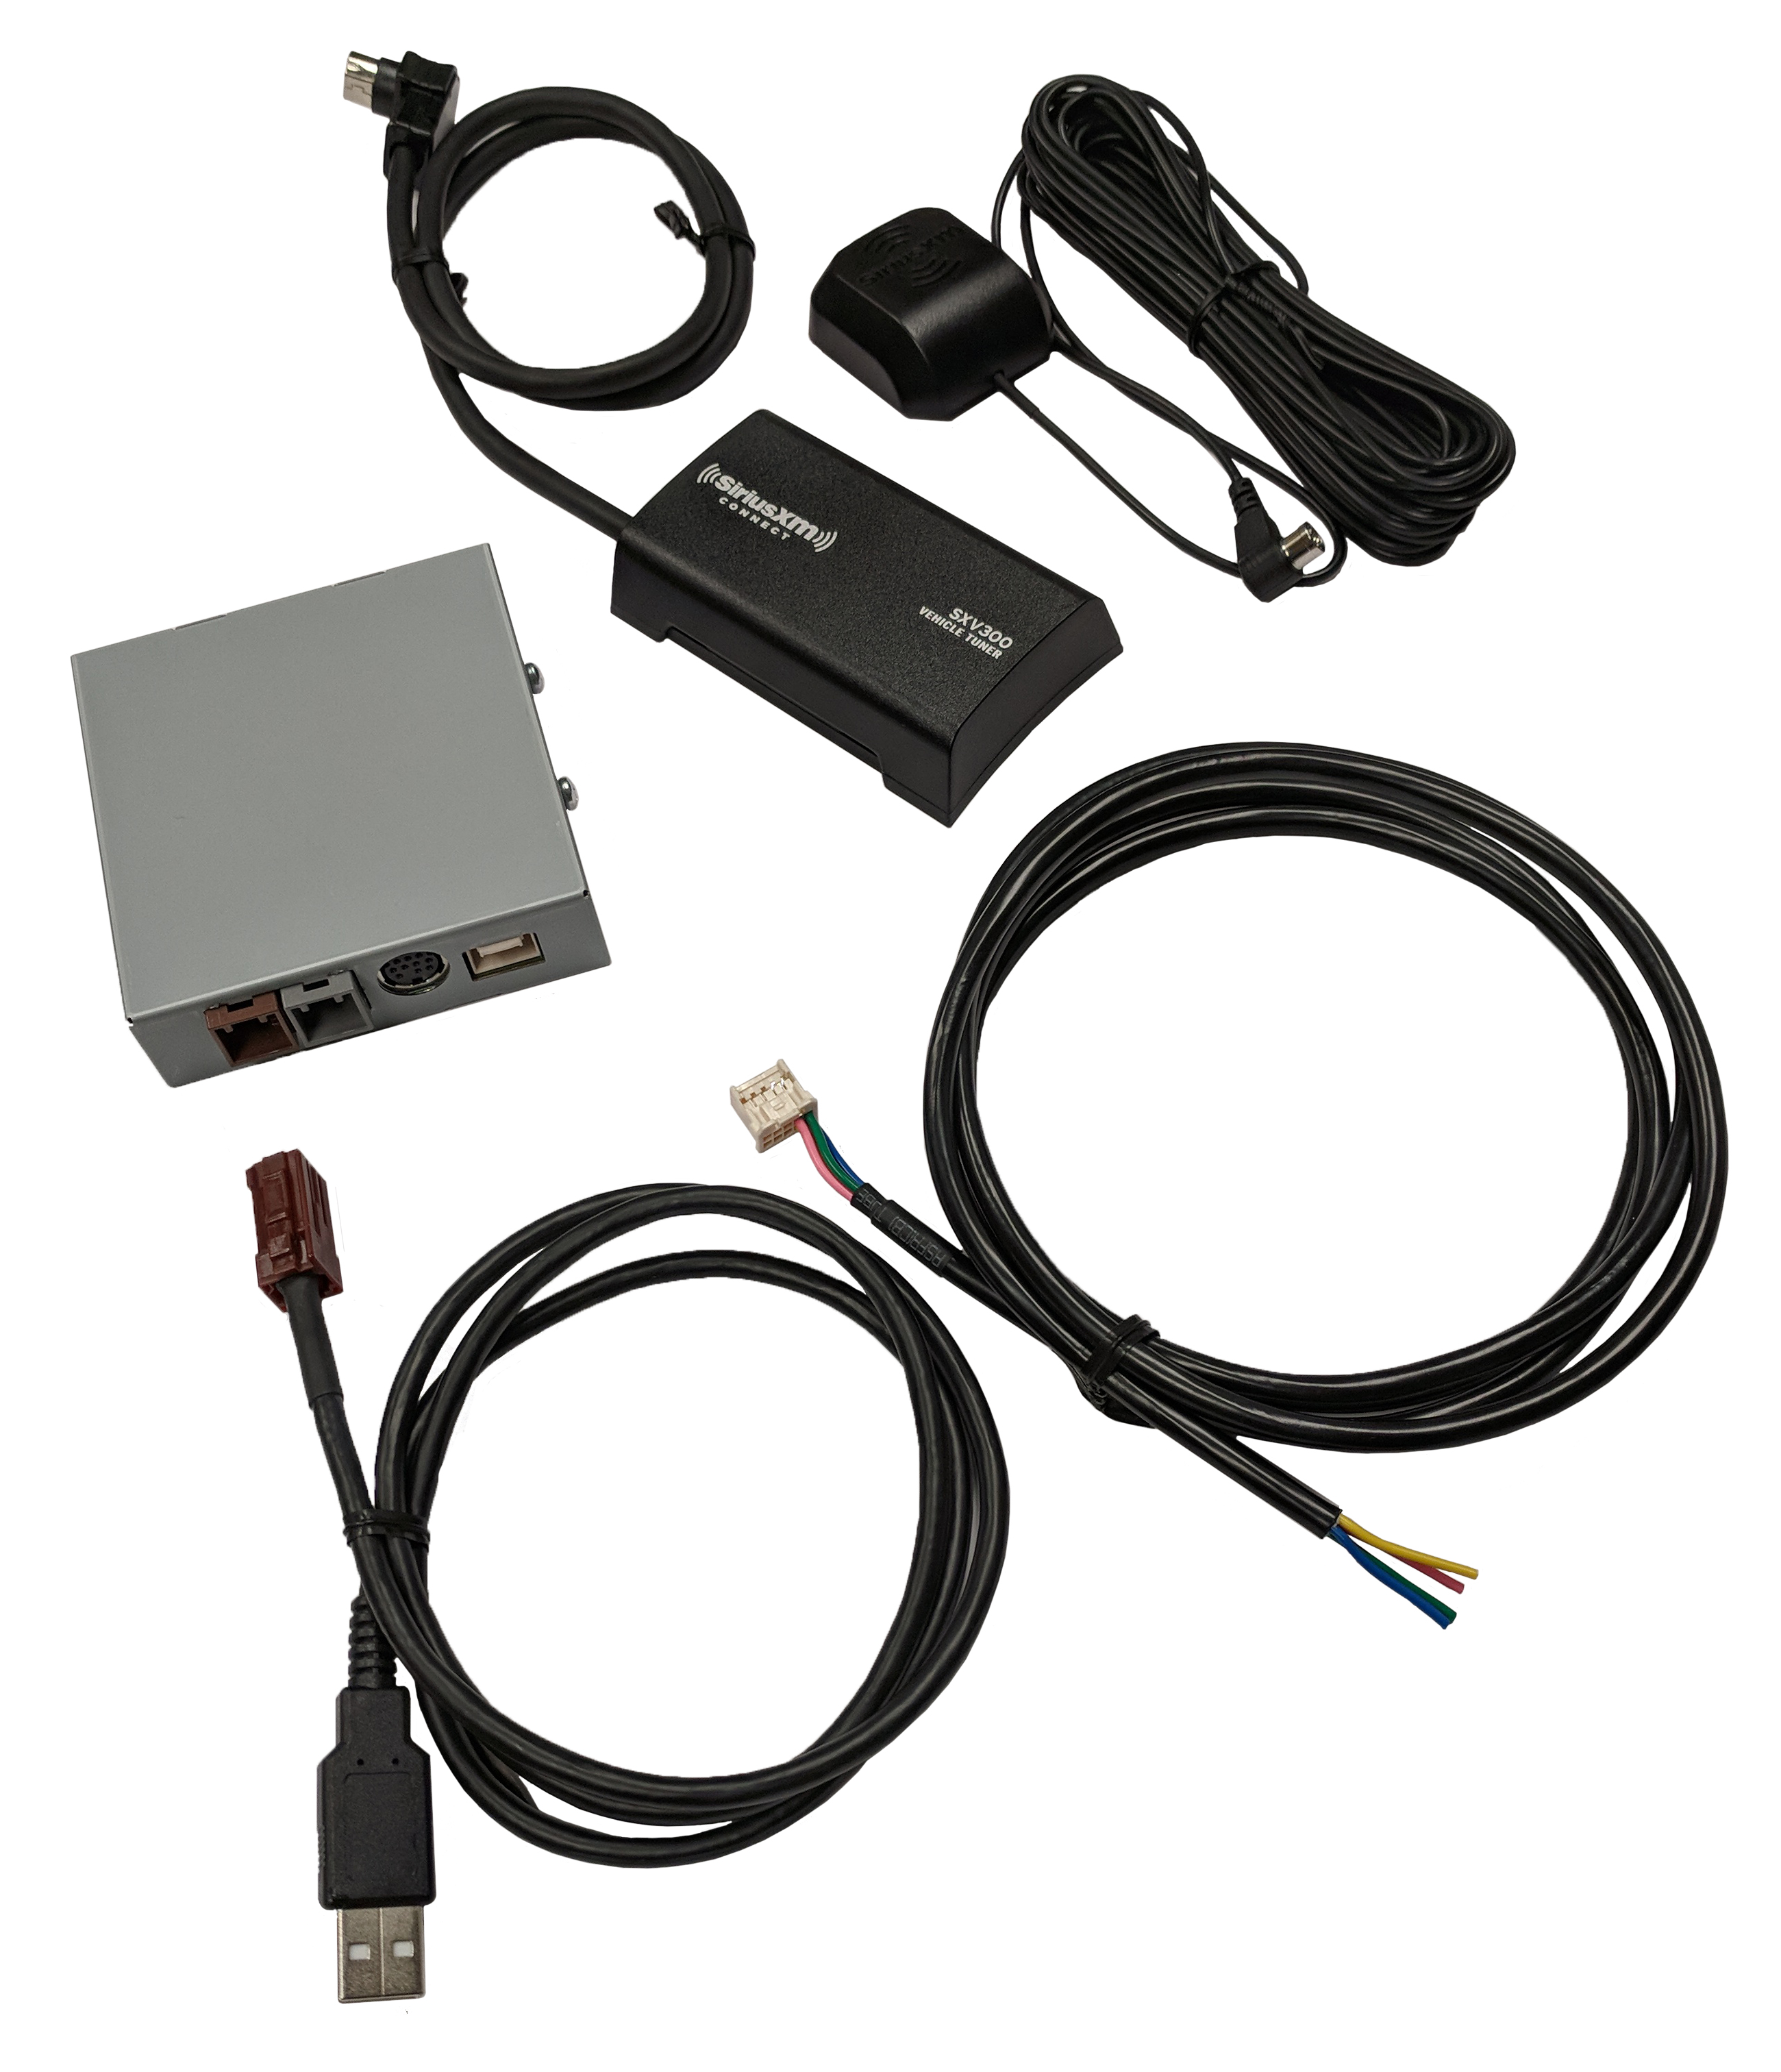 2016+ GM SiriusXM Satellite Radio Kit for USB data port g2